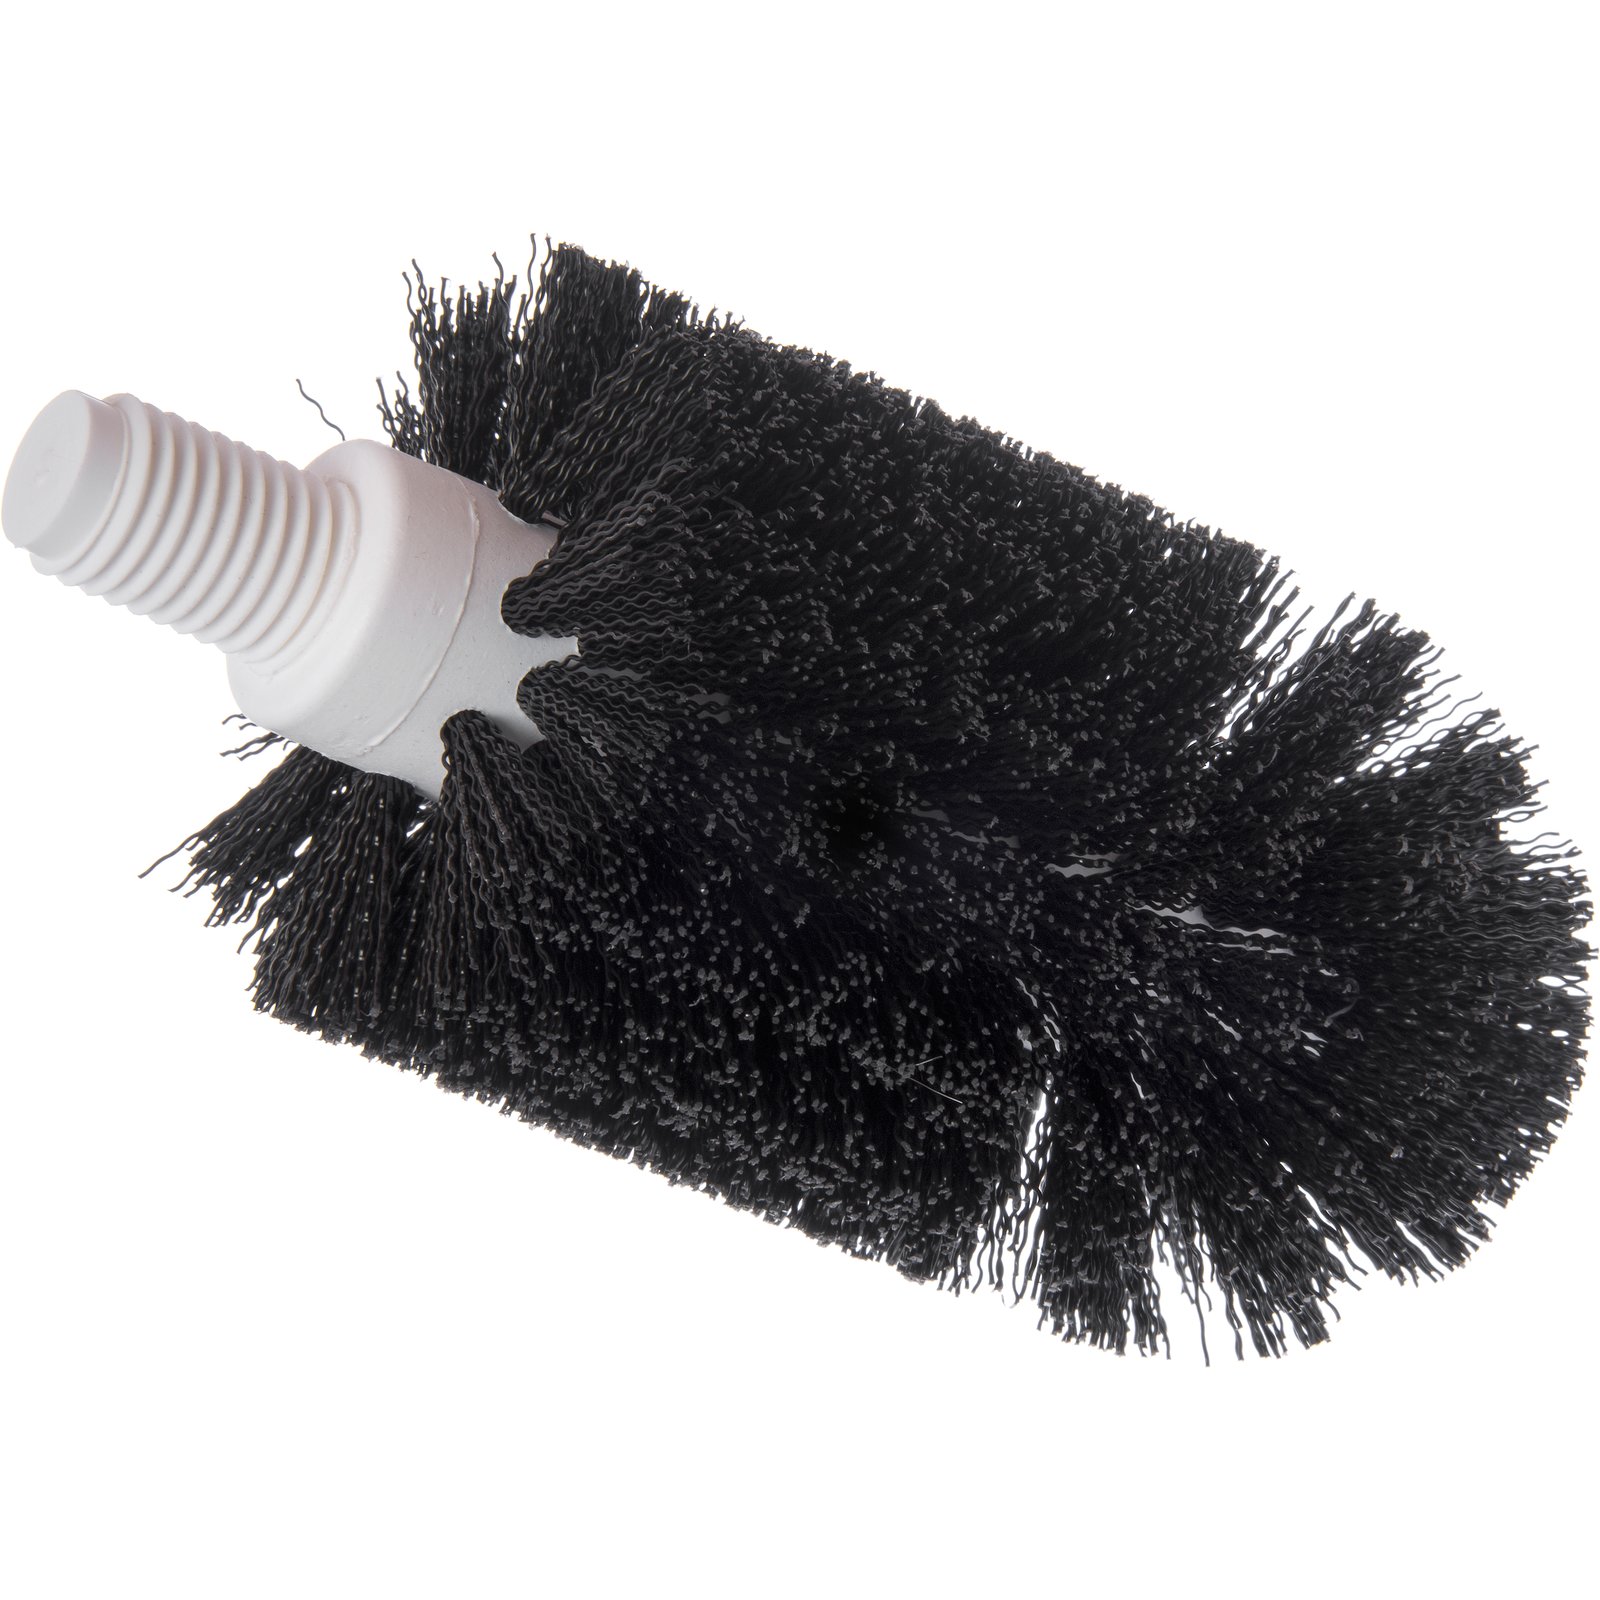 Black Color Bathroom Hard Bristle Crevice Cleaning Brush Household  Washbasin Cleaning Brush for Shower Tile Gaps Clean Brush